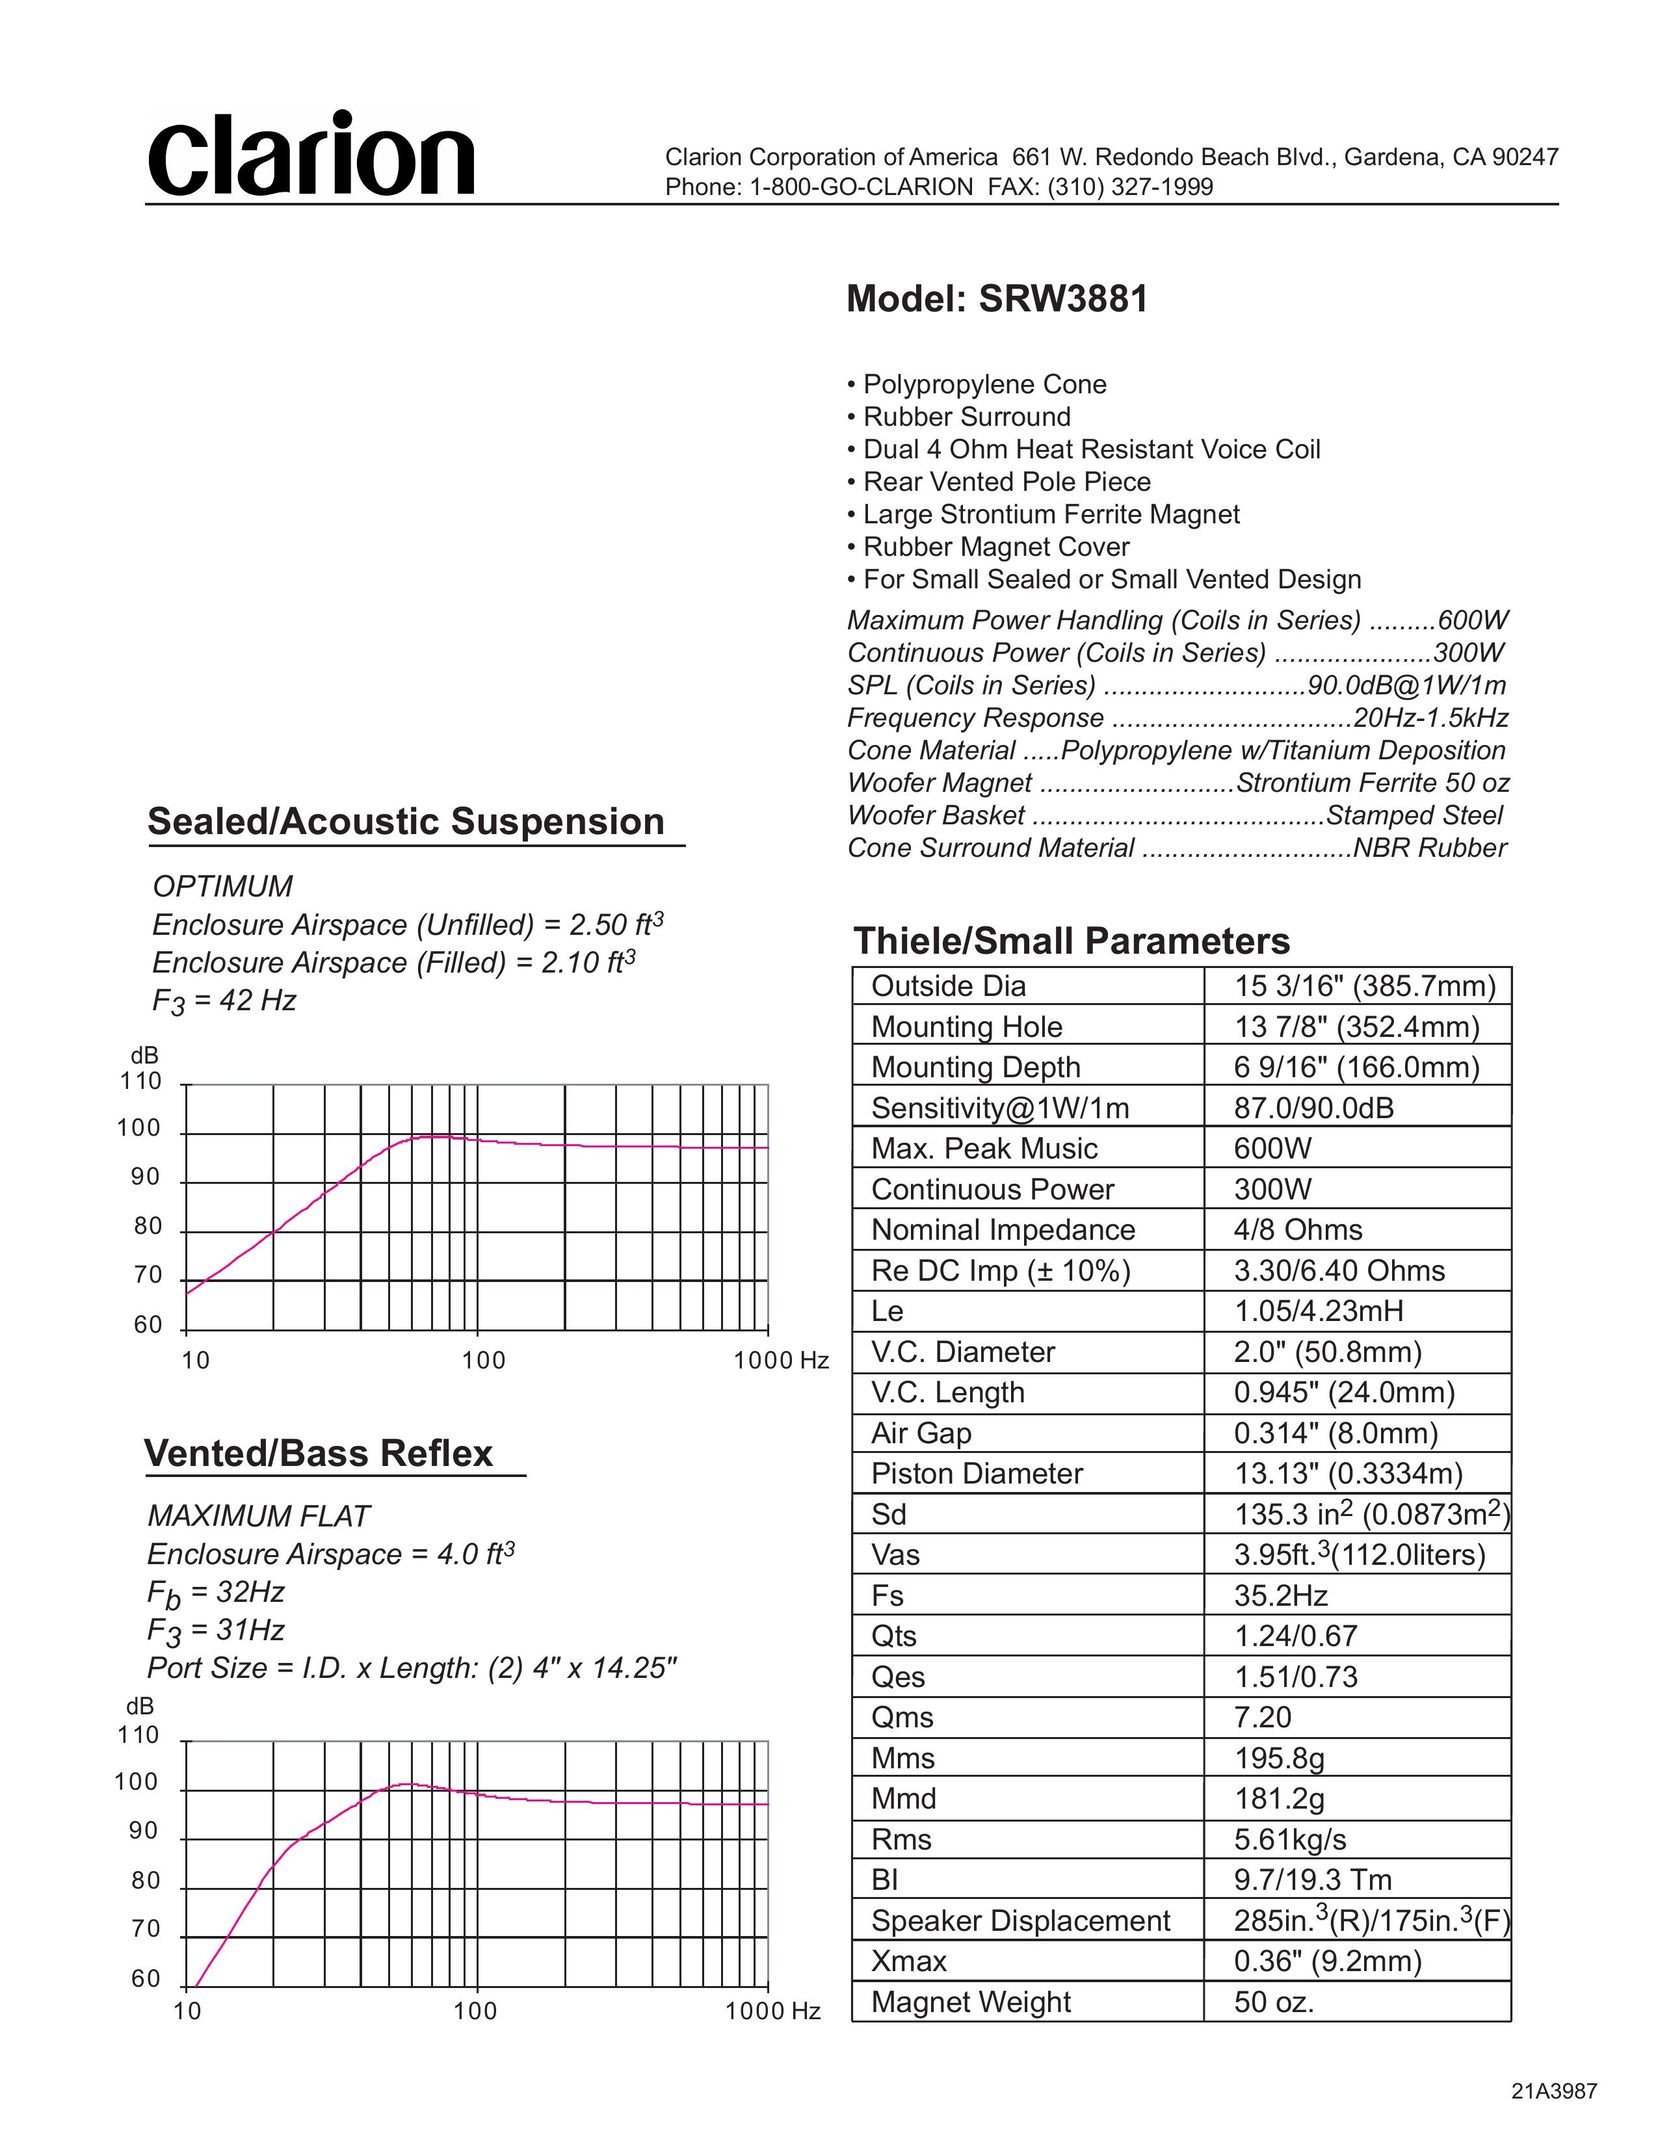 Clarion SRW3881 Speaker User Manual